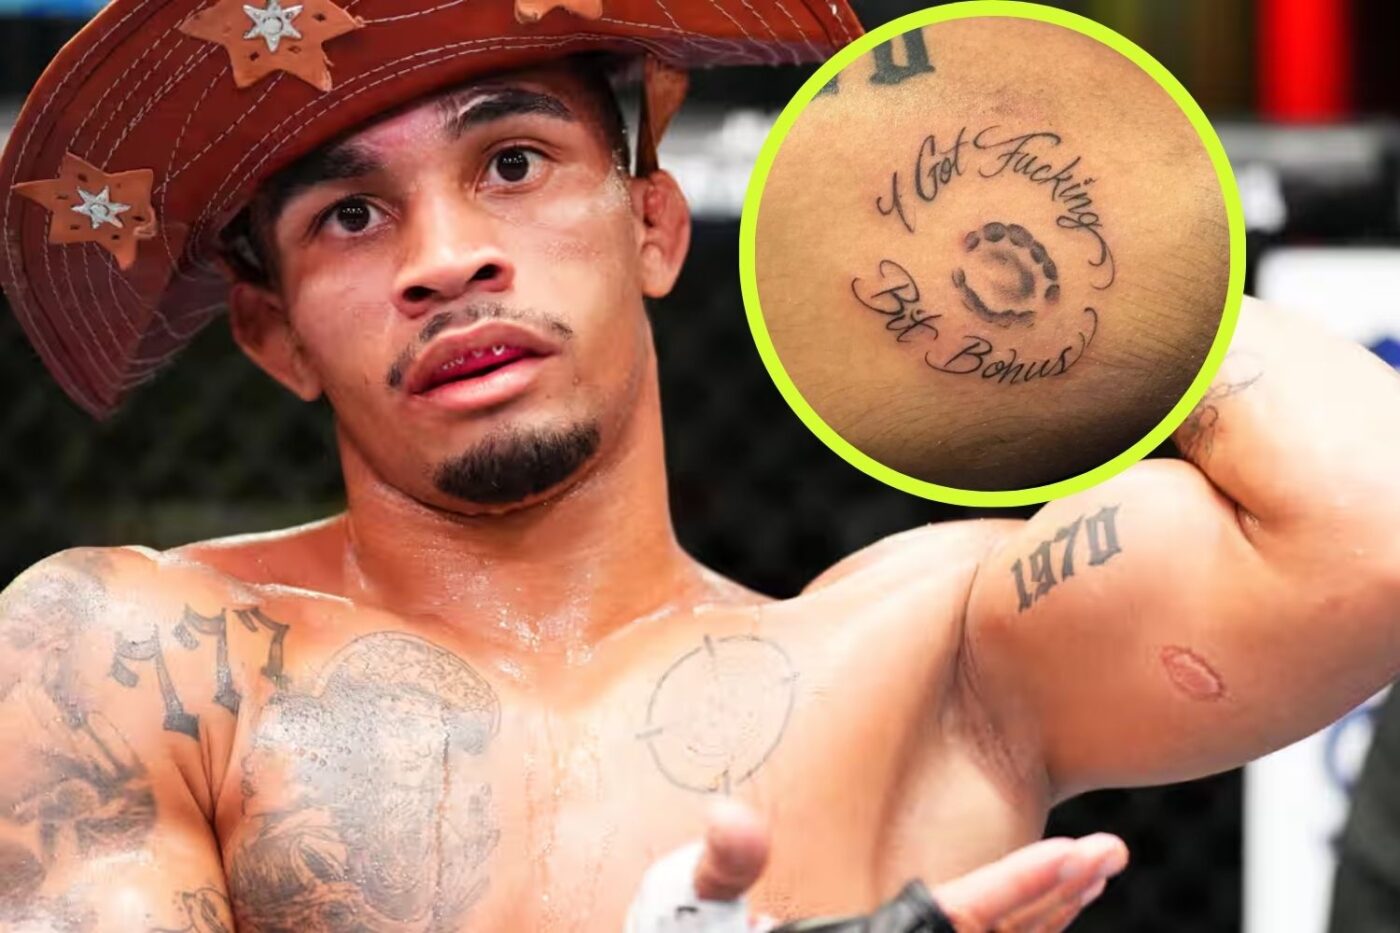 Andre Lima Got Igor Severino’s Bite Mark Tattooed After The Fight